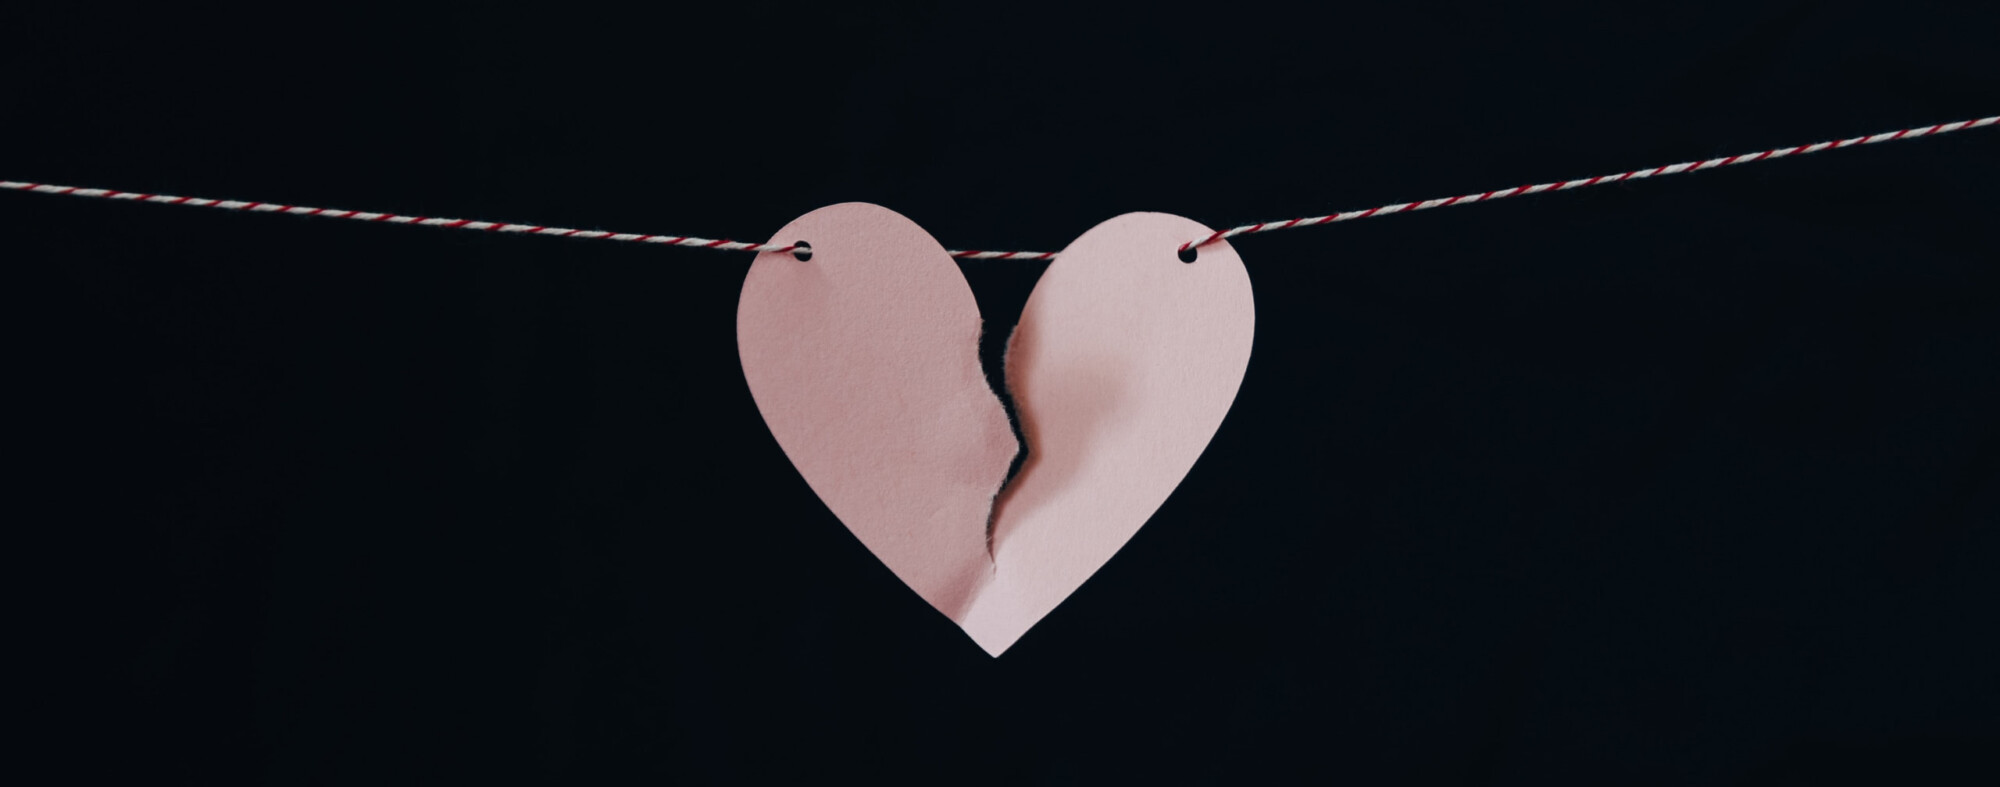 concept photo of broken heart